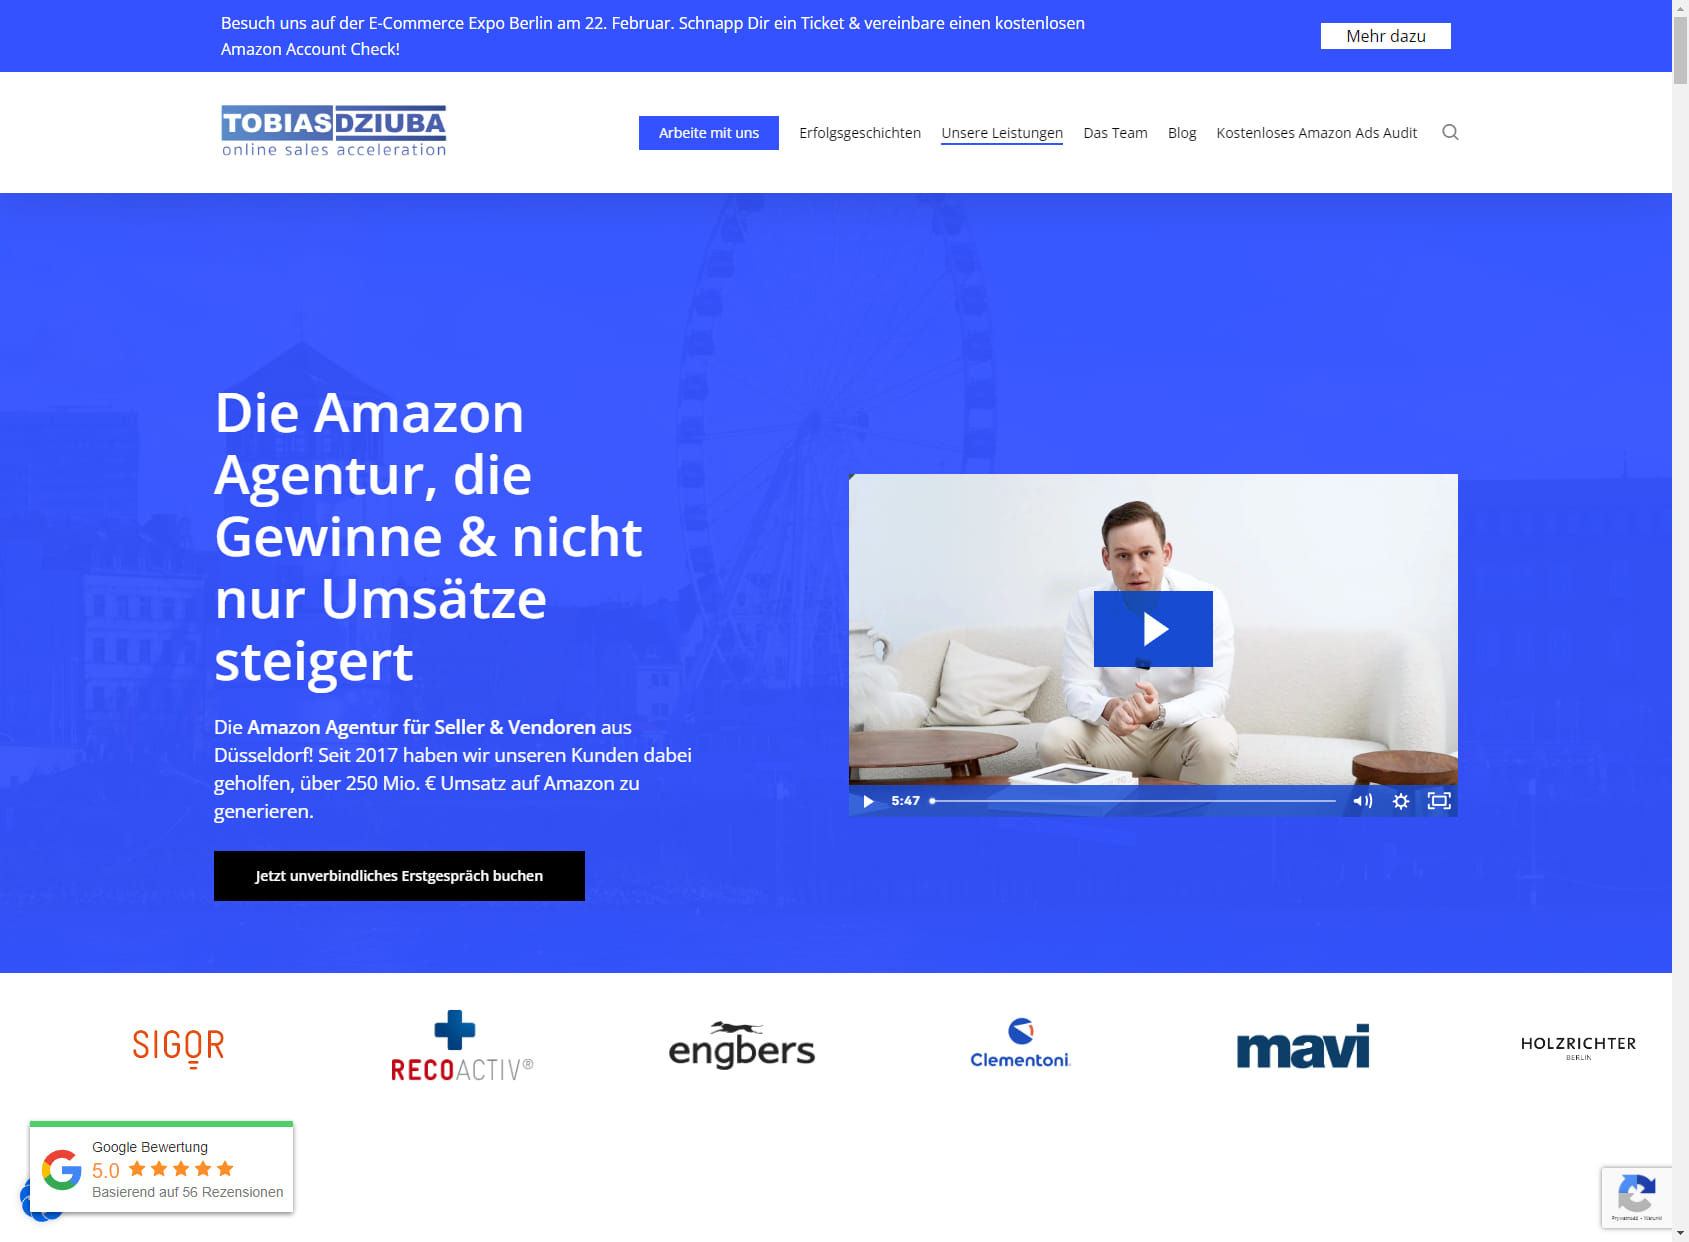 AdsMasters GmbH - Amazon Agentur & Beratung